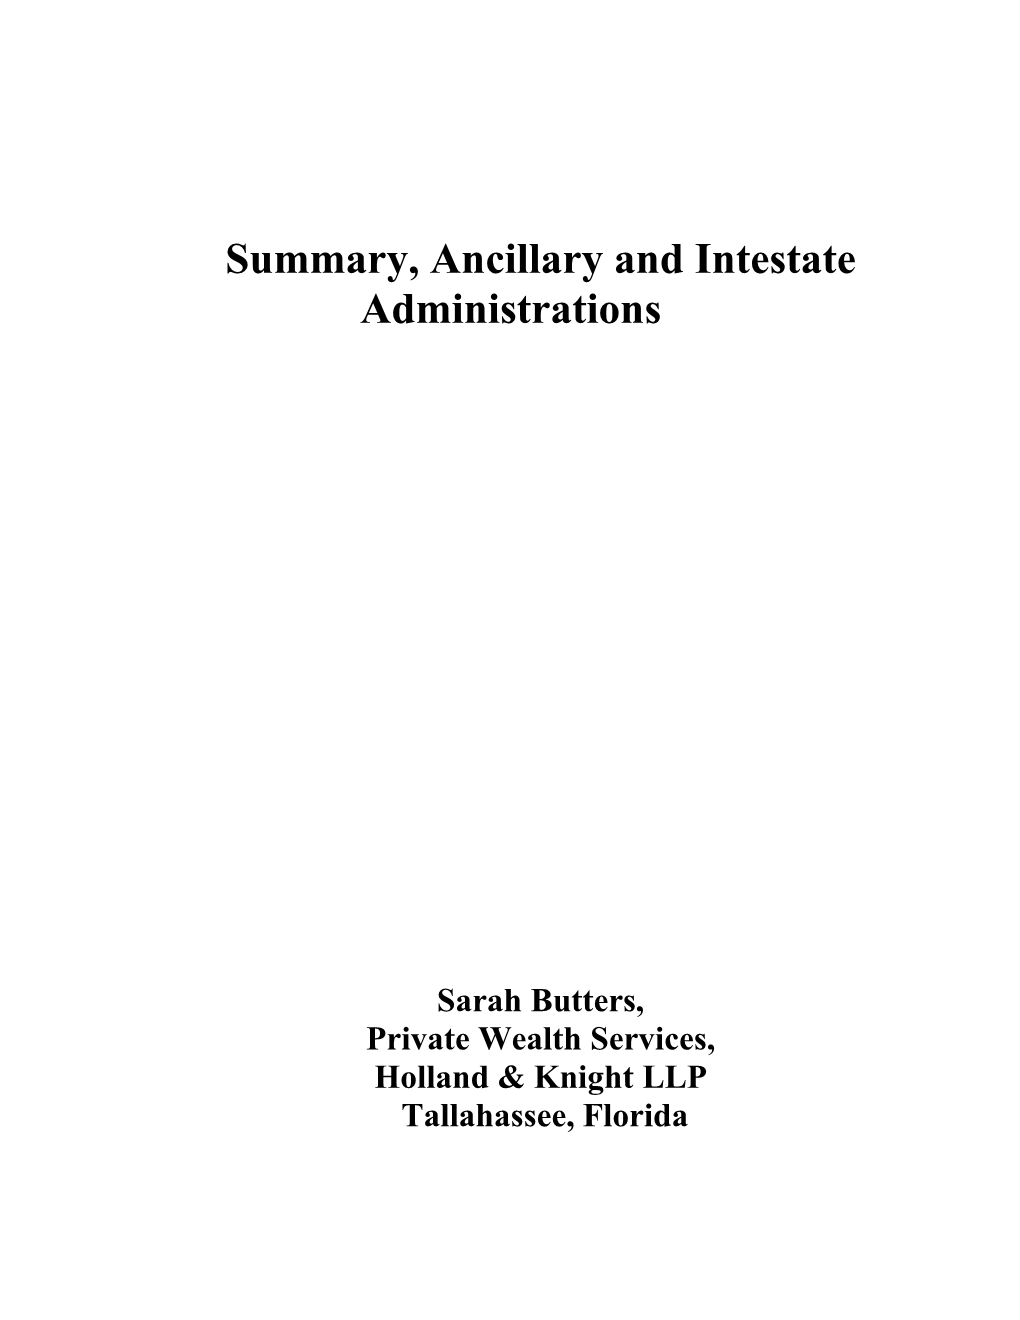 Summary, Ancillary and Intestate Administrations